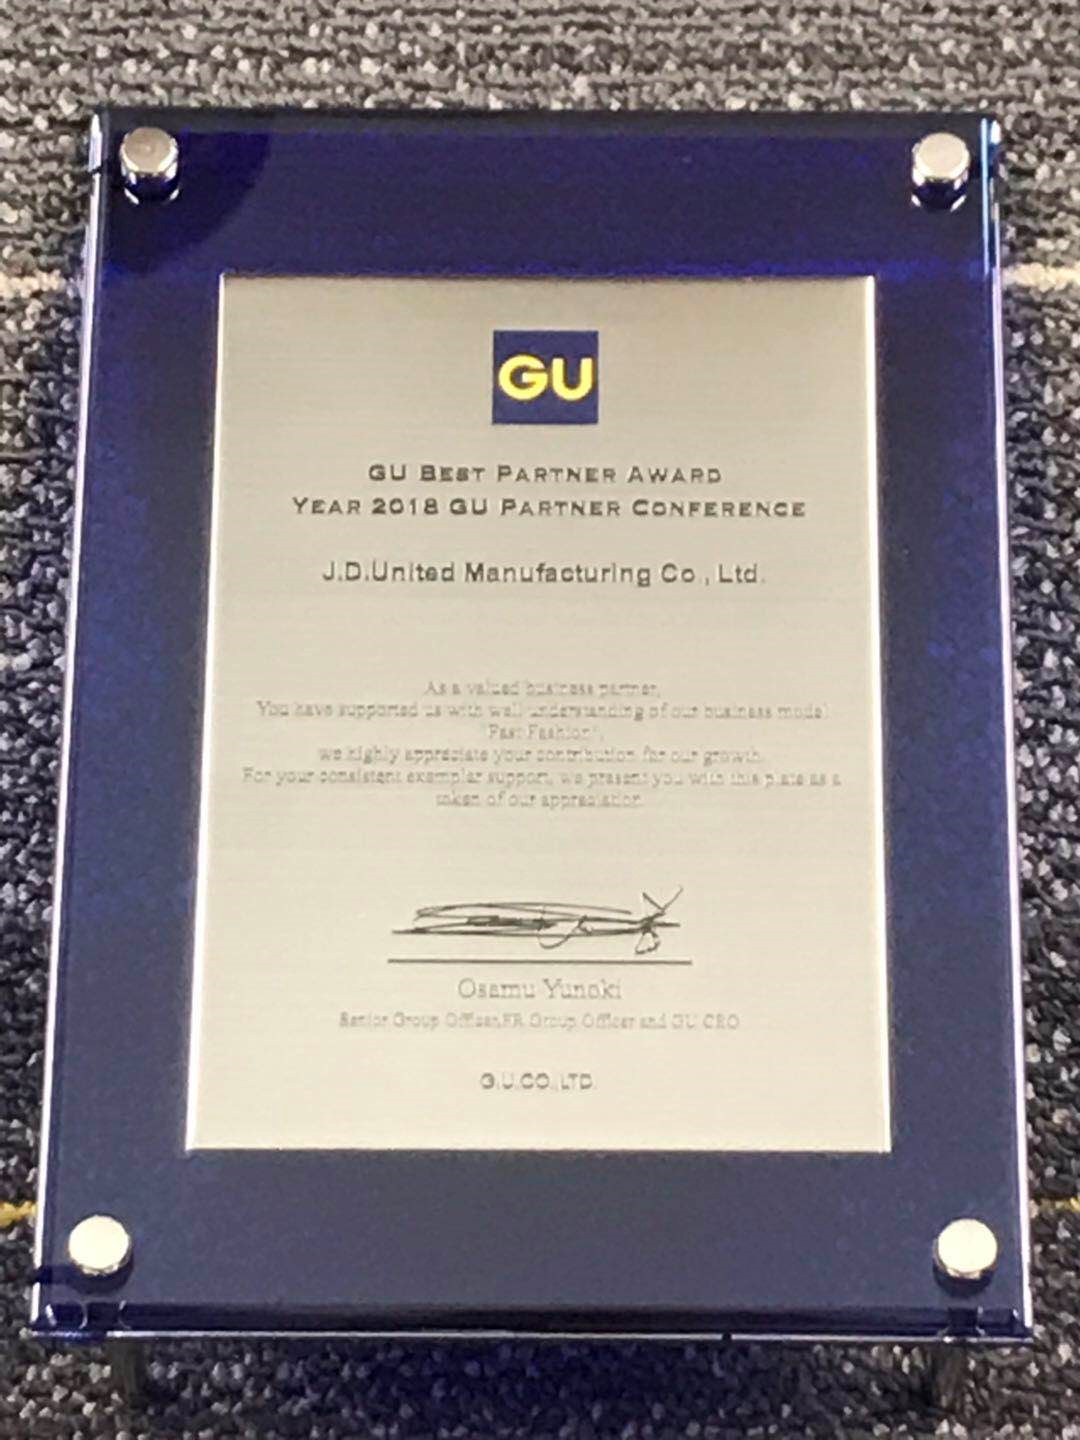 Won the 2018 GU BEST PARTNER AWARD